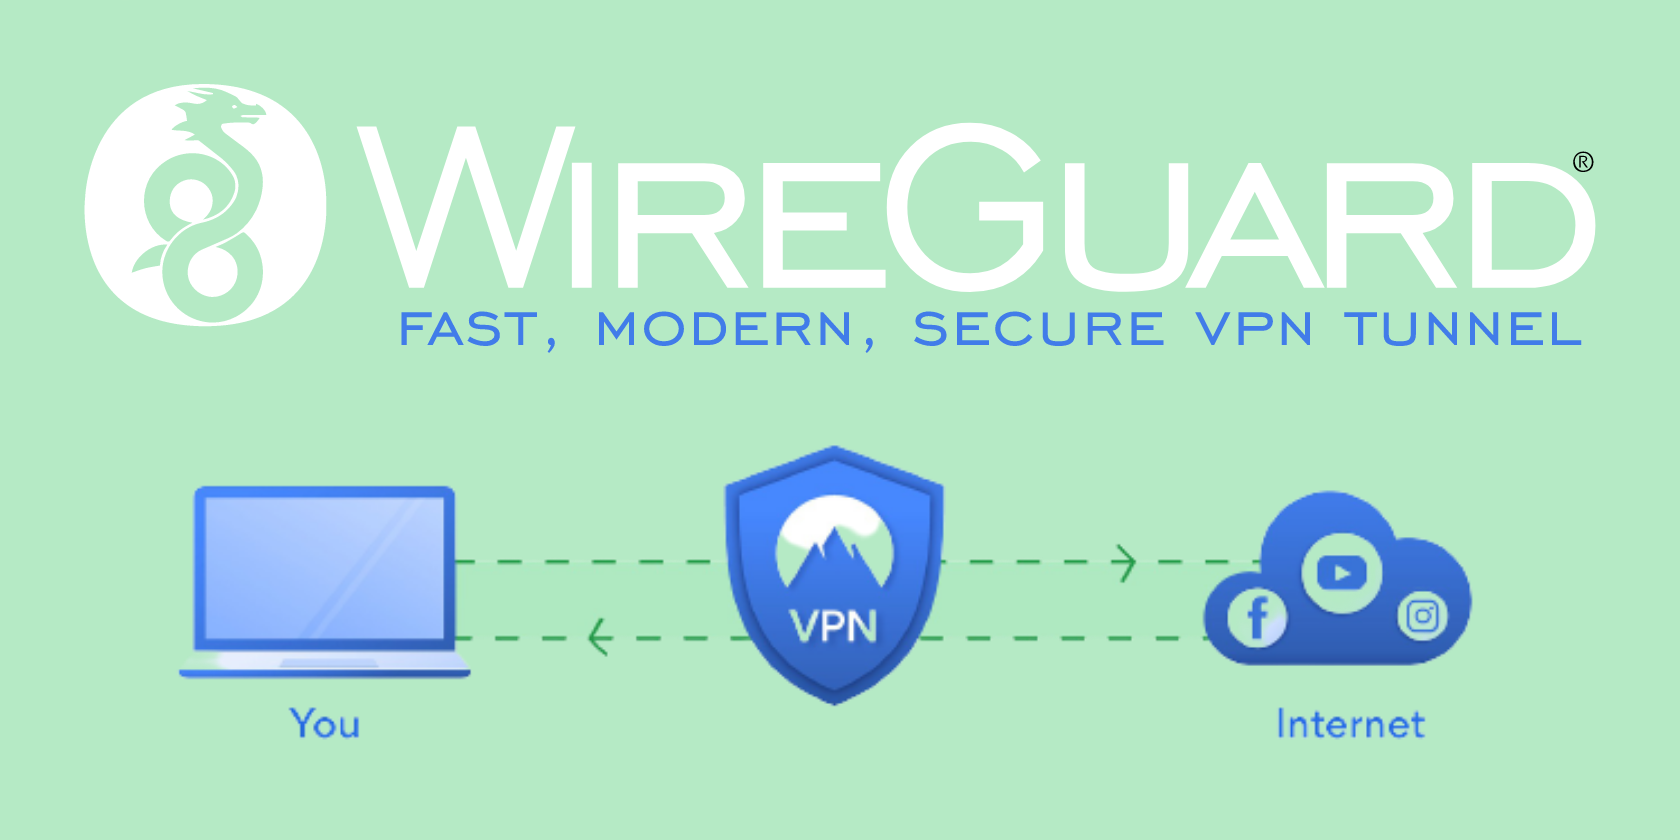 Wireguard vs openvpn. Впн WIREGUARD. WIREGUARD логотип. Скорость VPN WIREGUARD OPENVPN. WIREGUARD туннели.